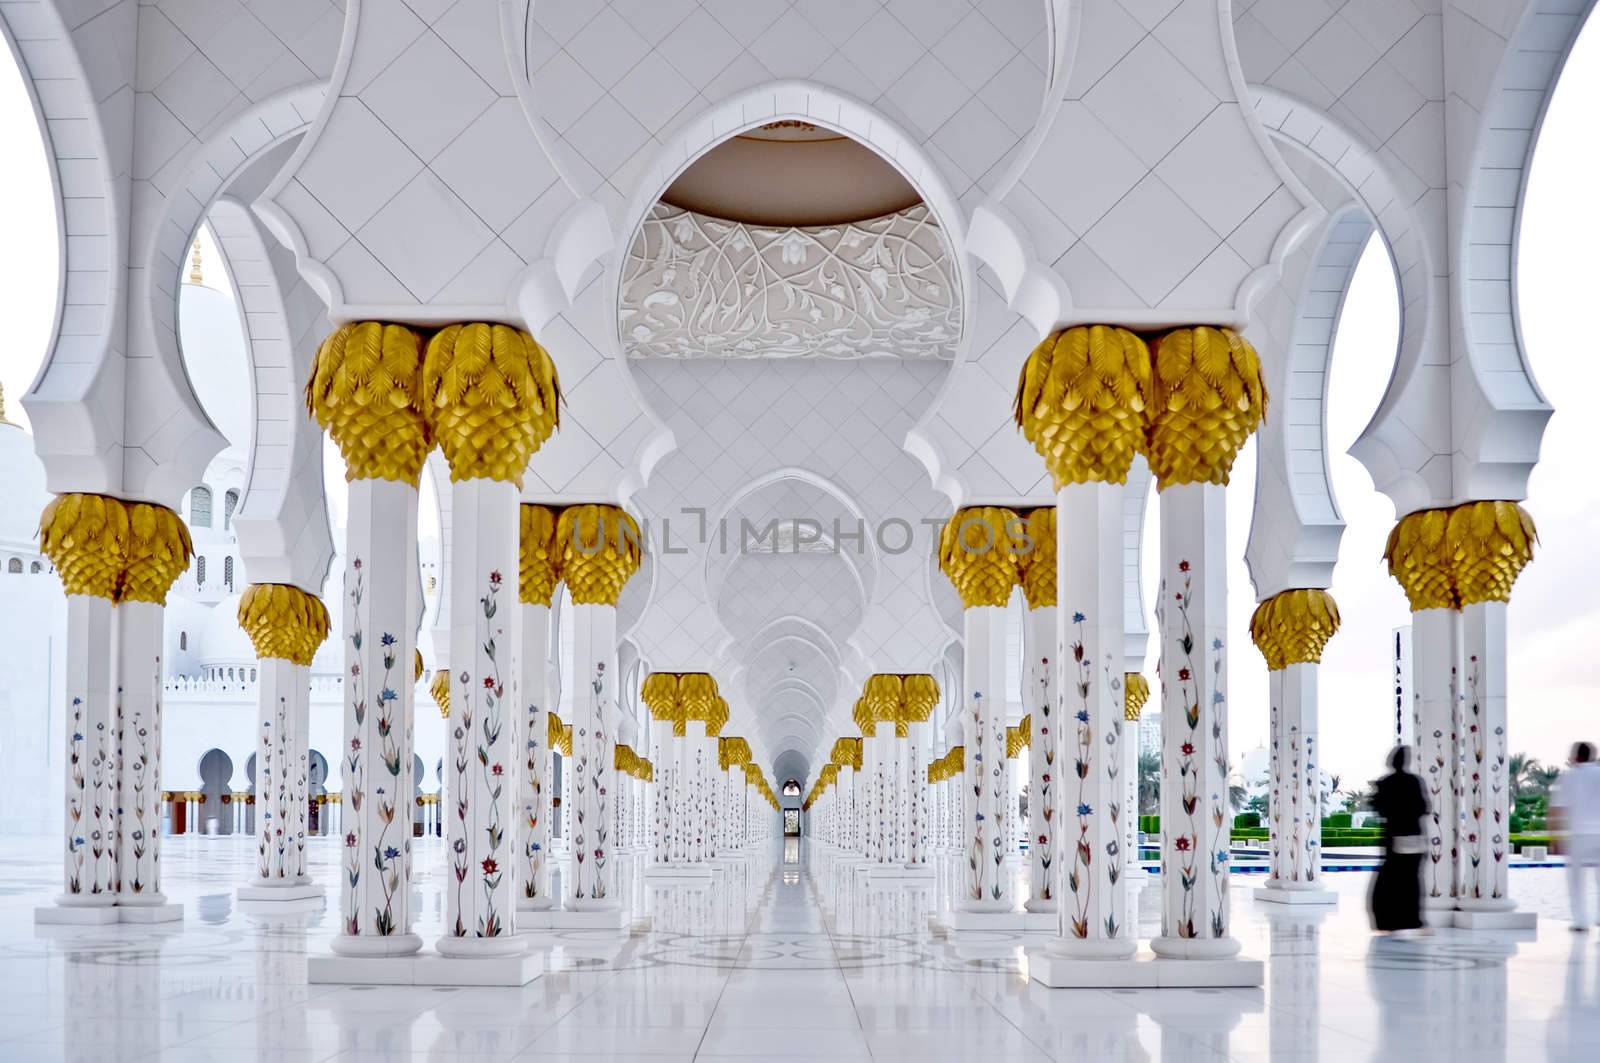 Sheikh Zayed Grand Mosque in Abu Dhabi UAE